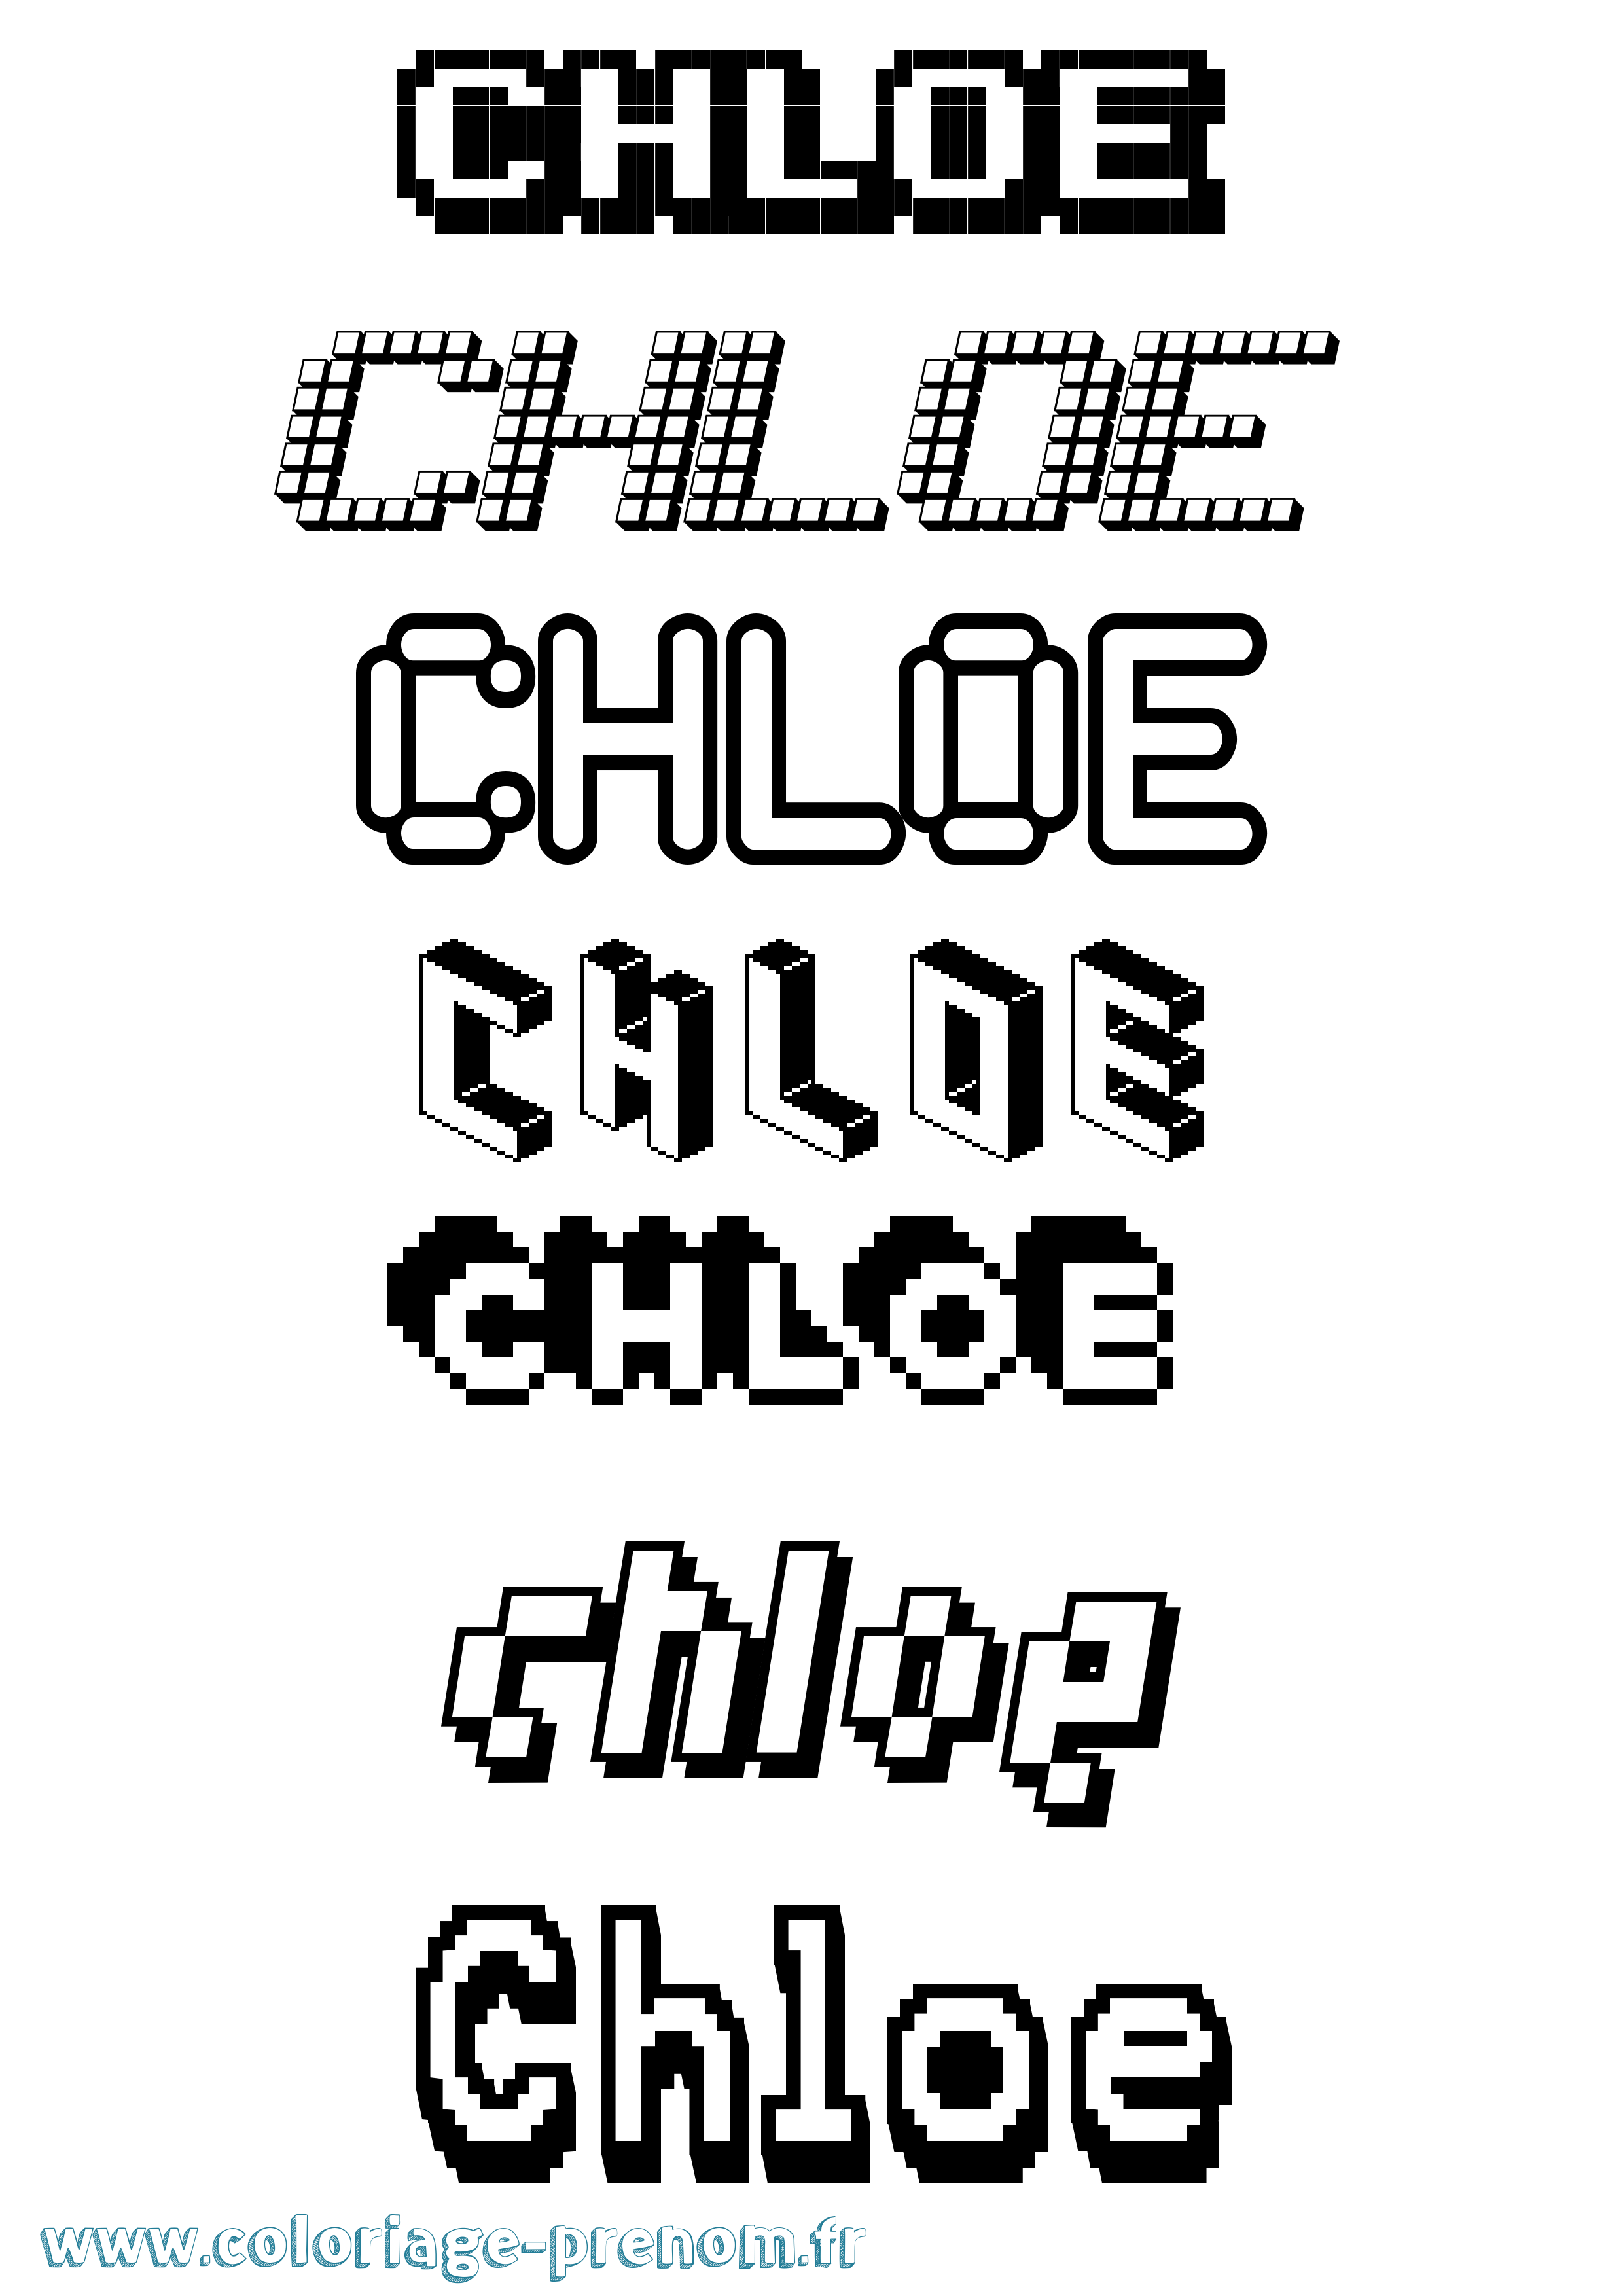 Coloriage prénom Chloe Pixel